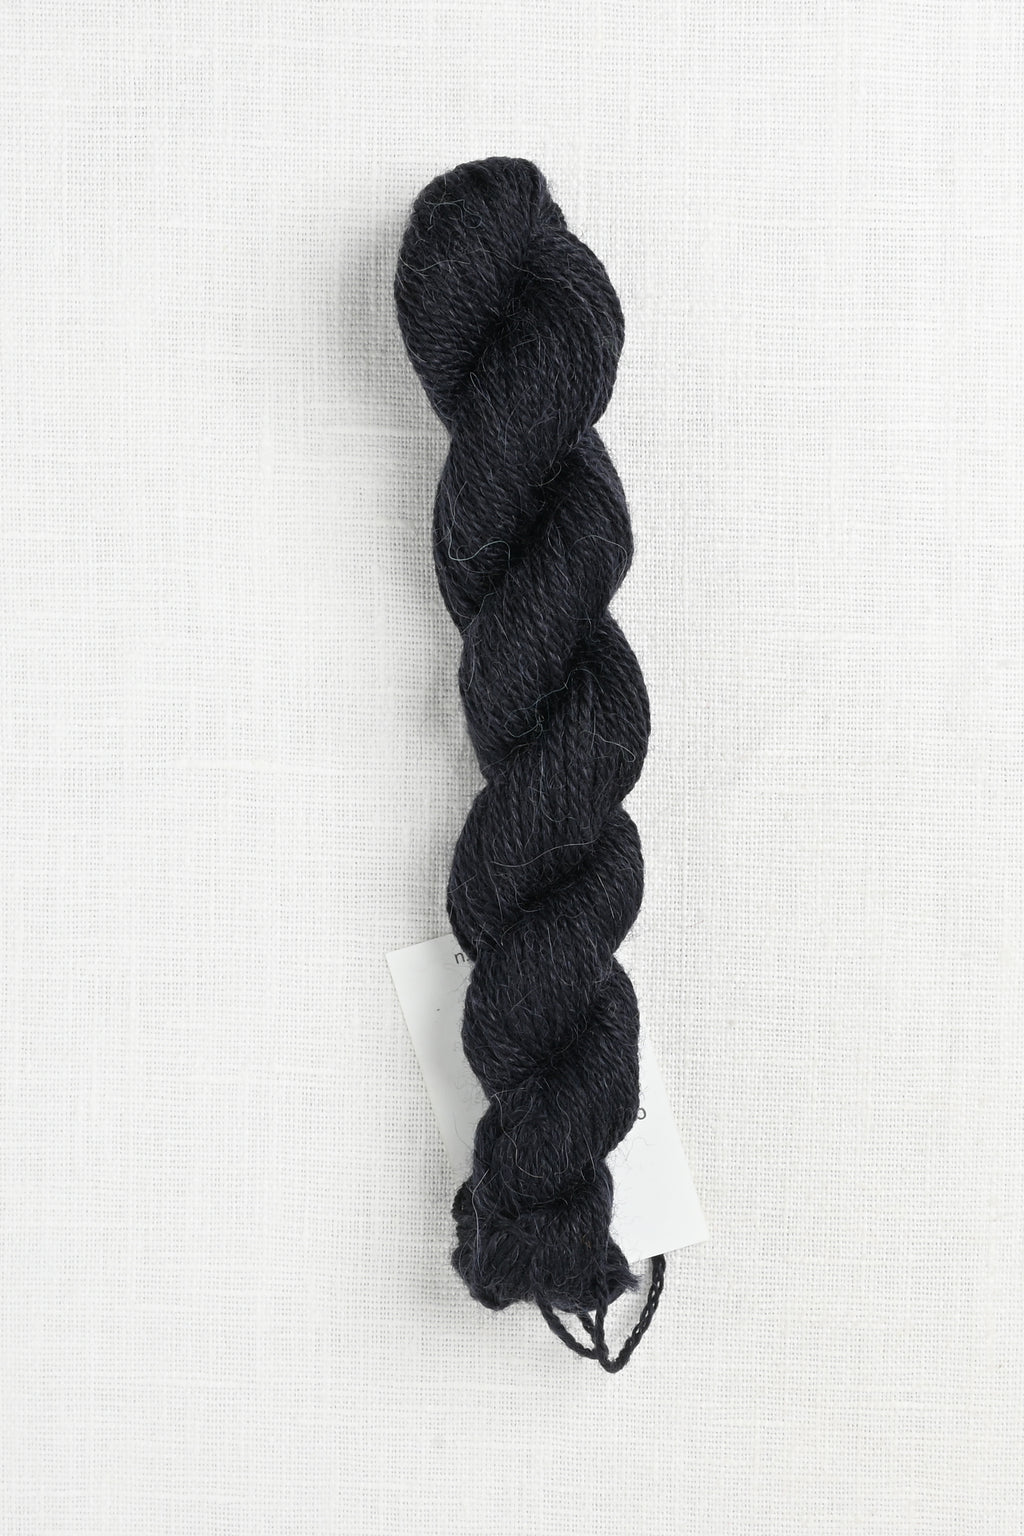 kelbourne woolens perennial minis black